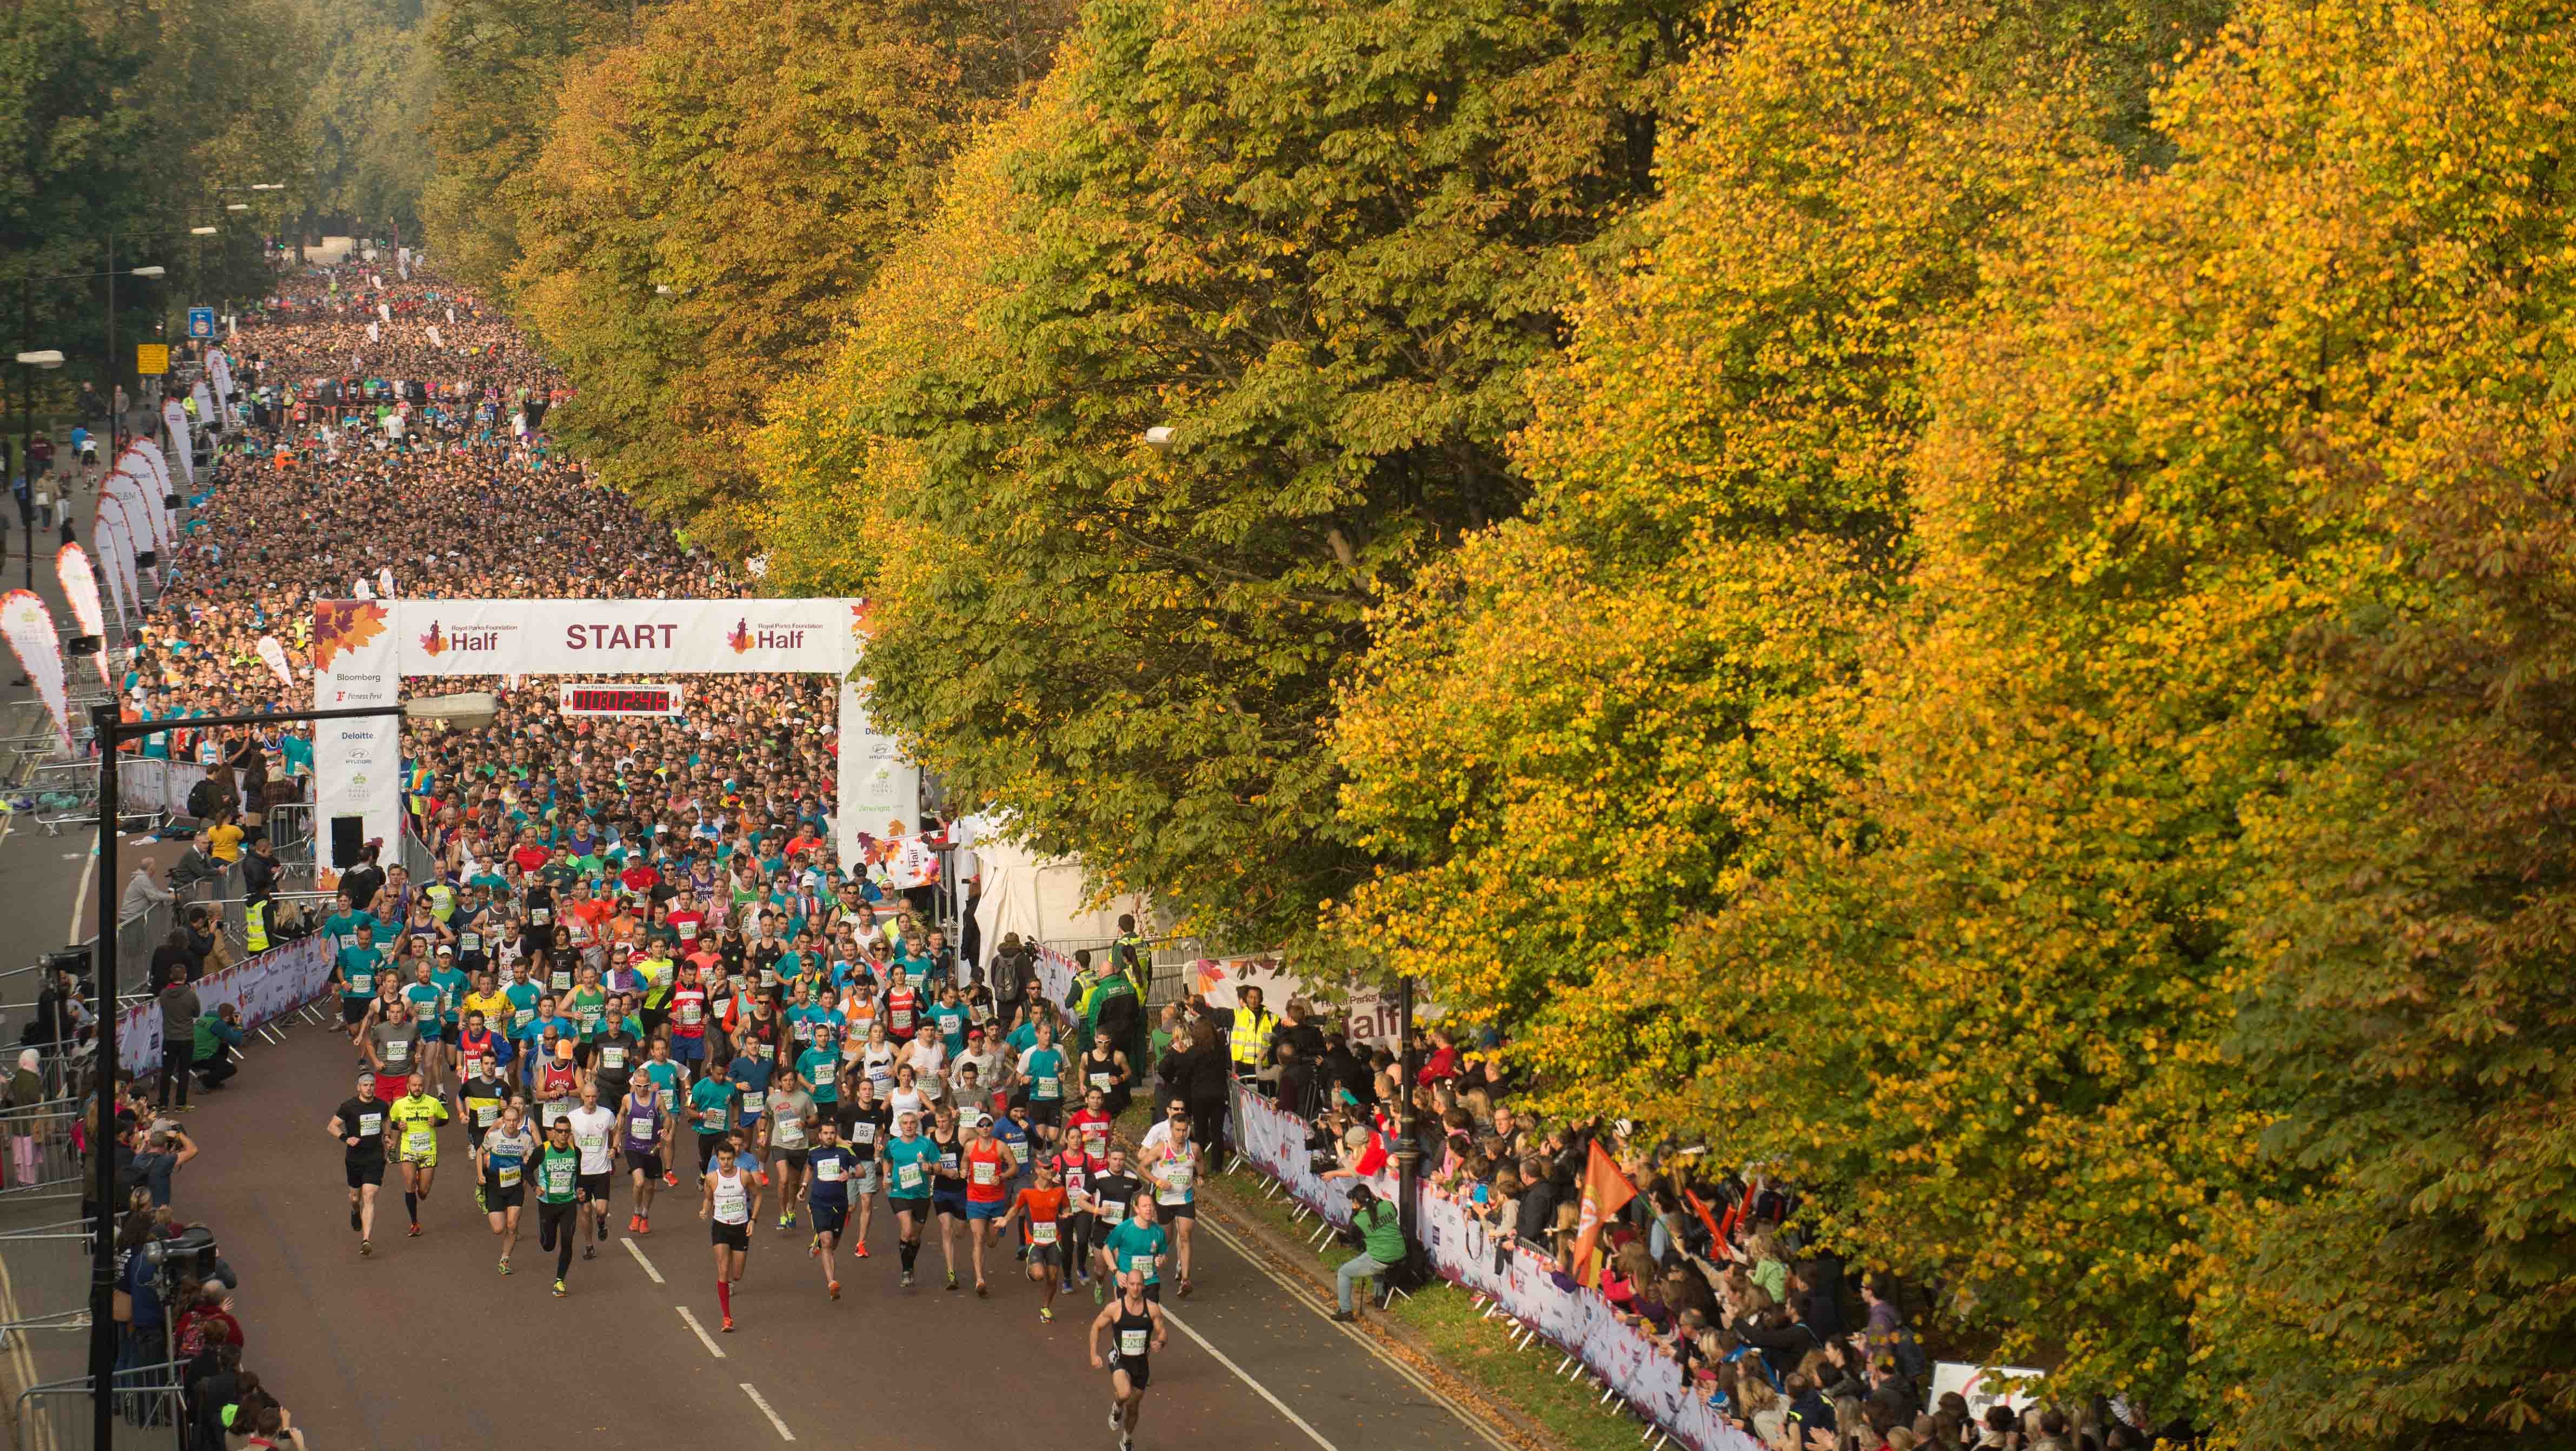 Thousands take part in Royal Parks Foundation half marathon ITV News